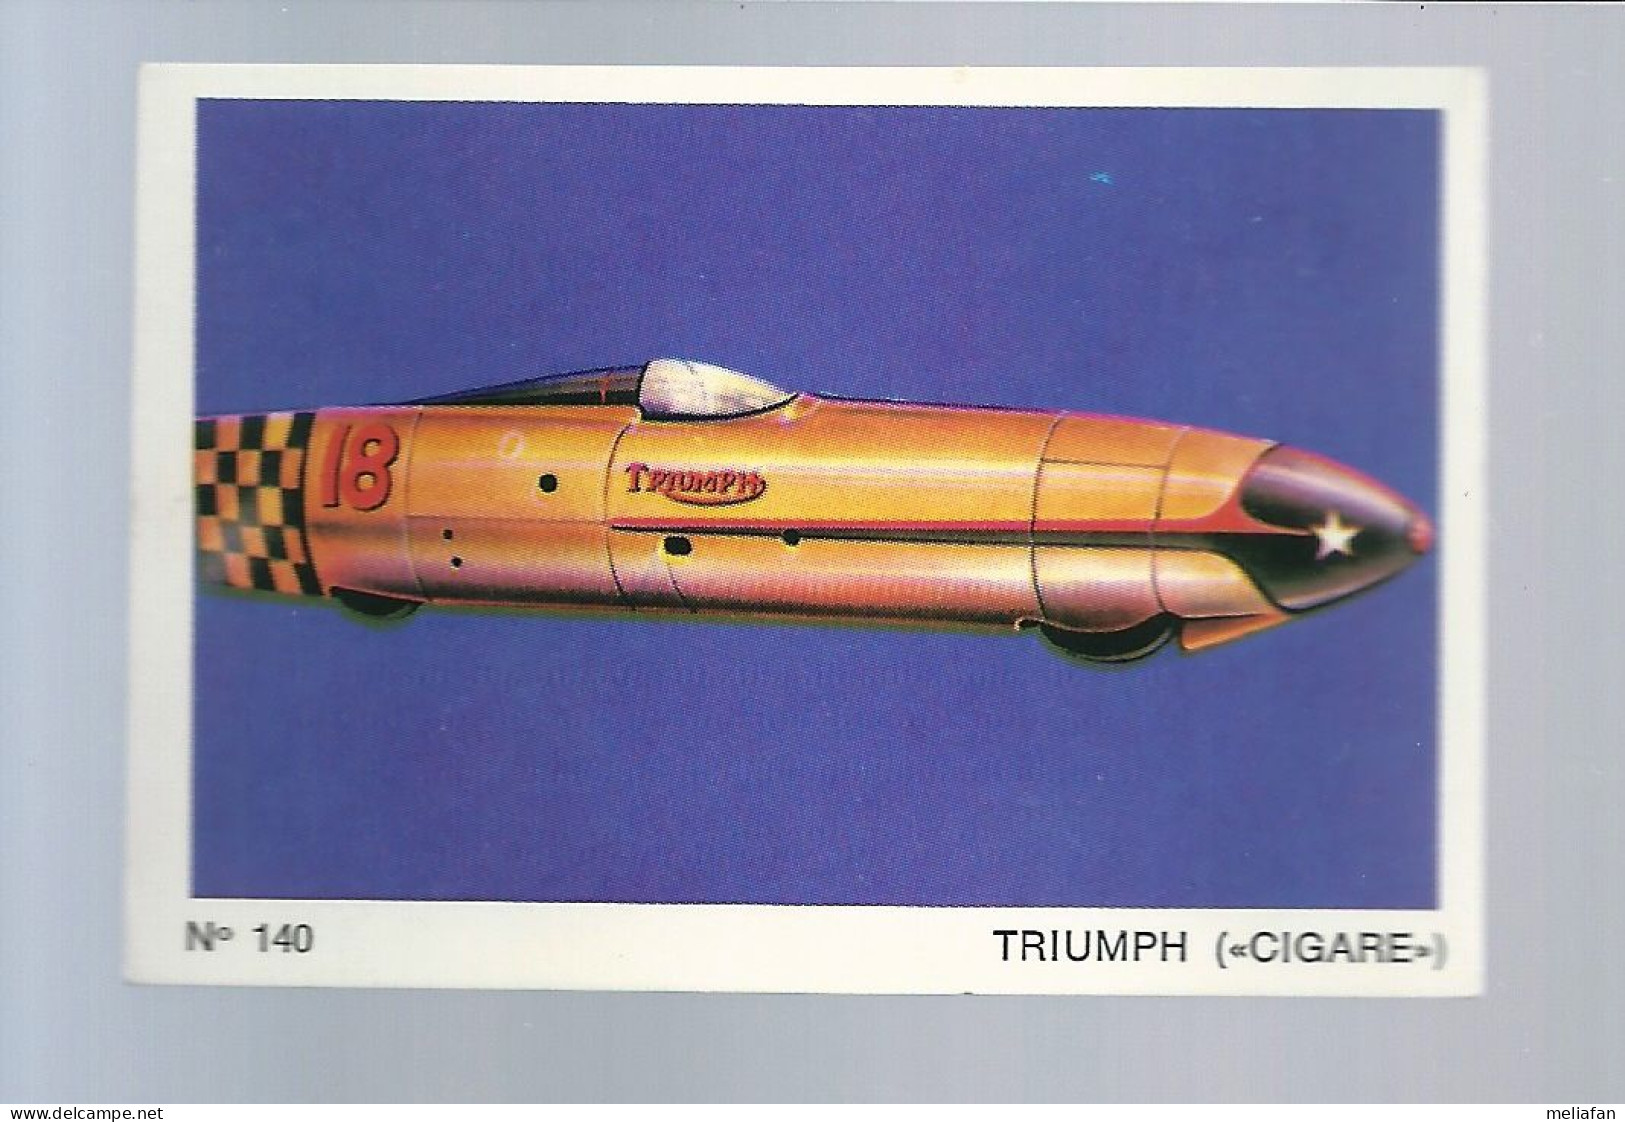 W192 - TRIUMPH CIGARE - FORMAT 7.5 X 5 CM - Motos